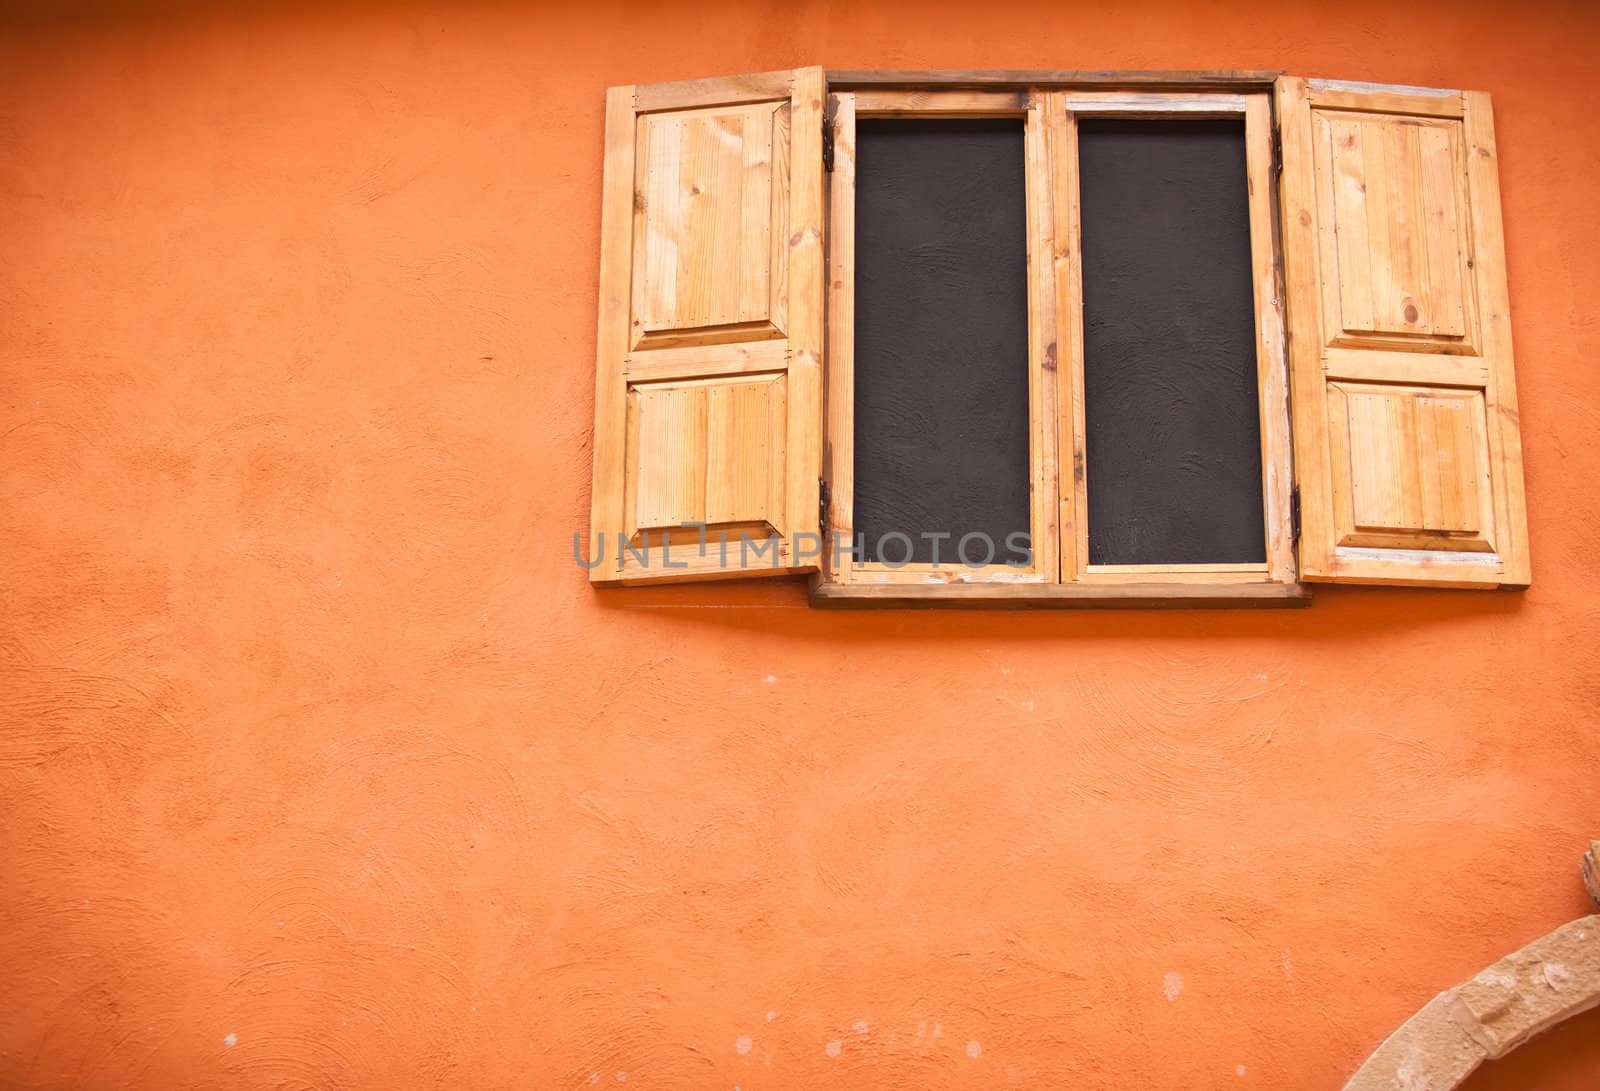 Vintage window on orange wall by Suriyaphoto